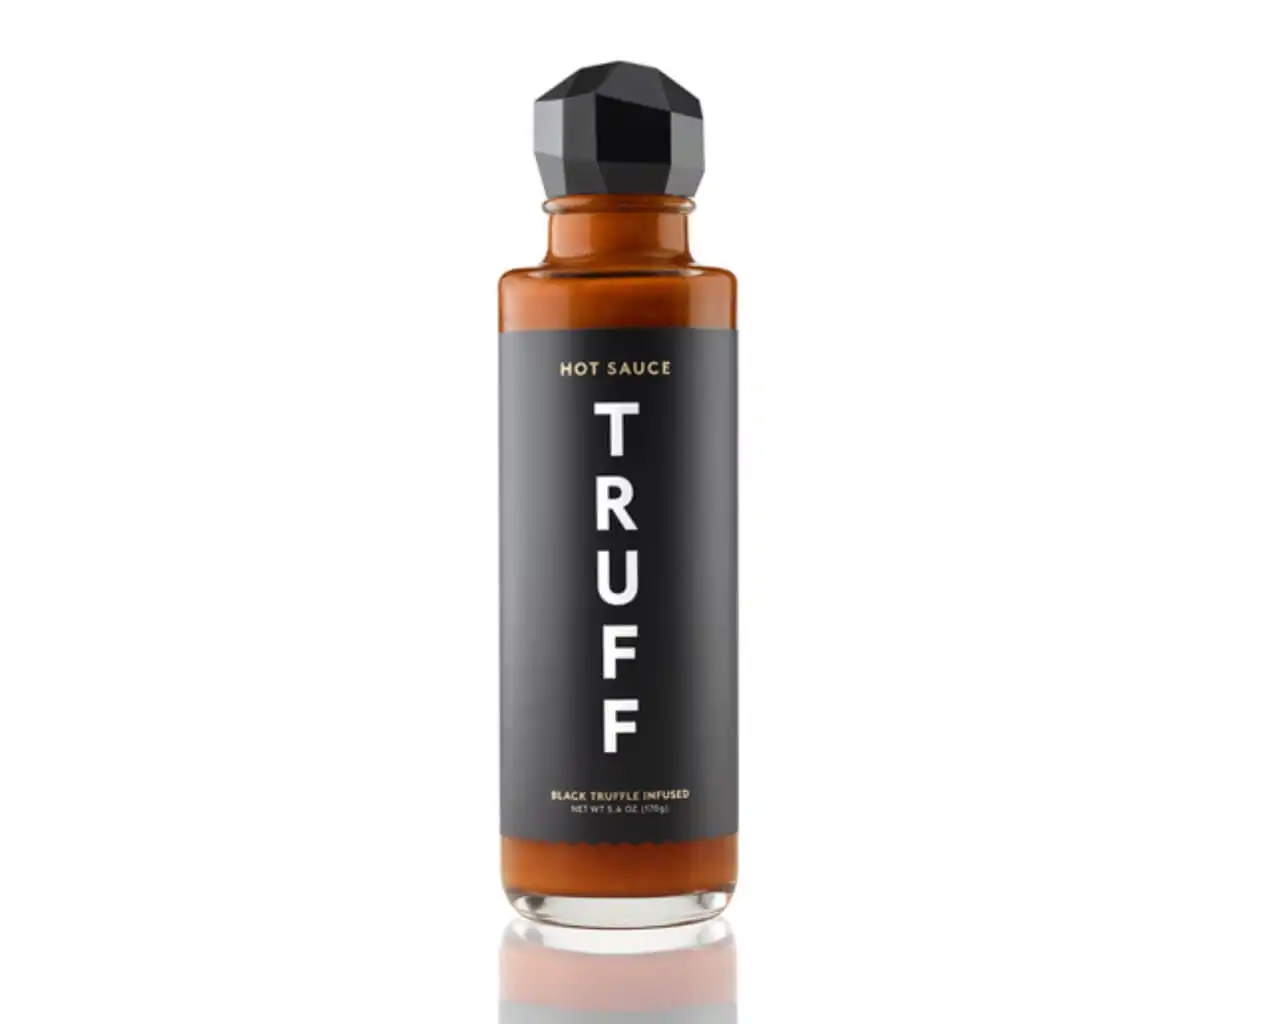 Truff Original Hot Sauce